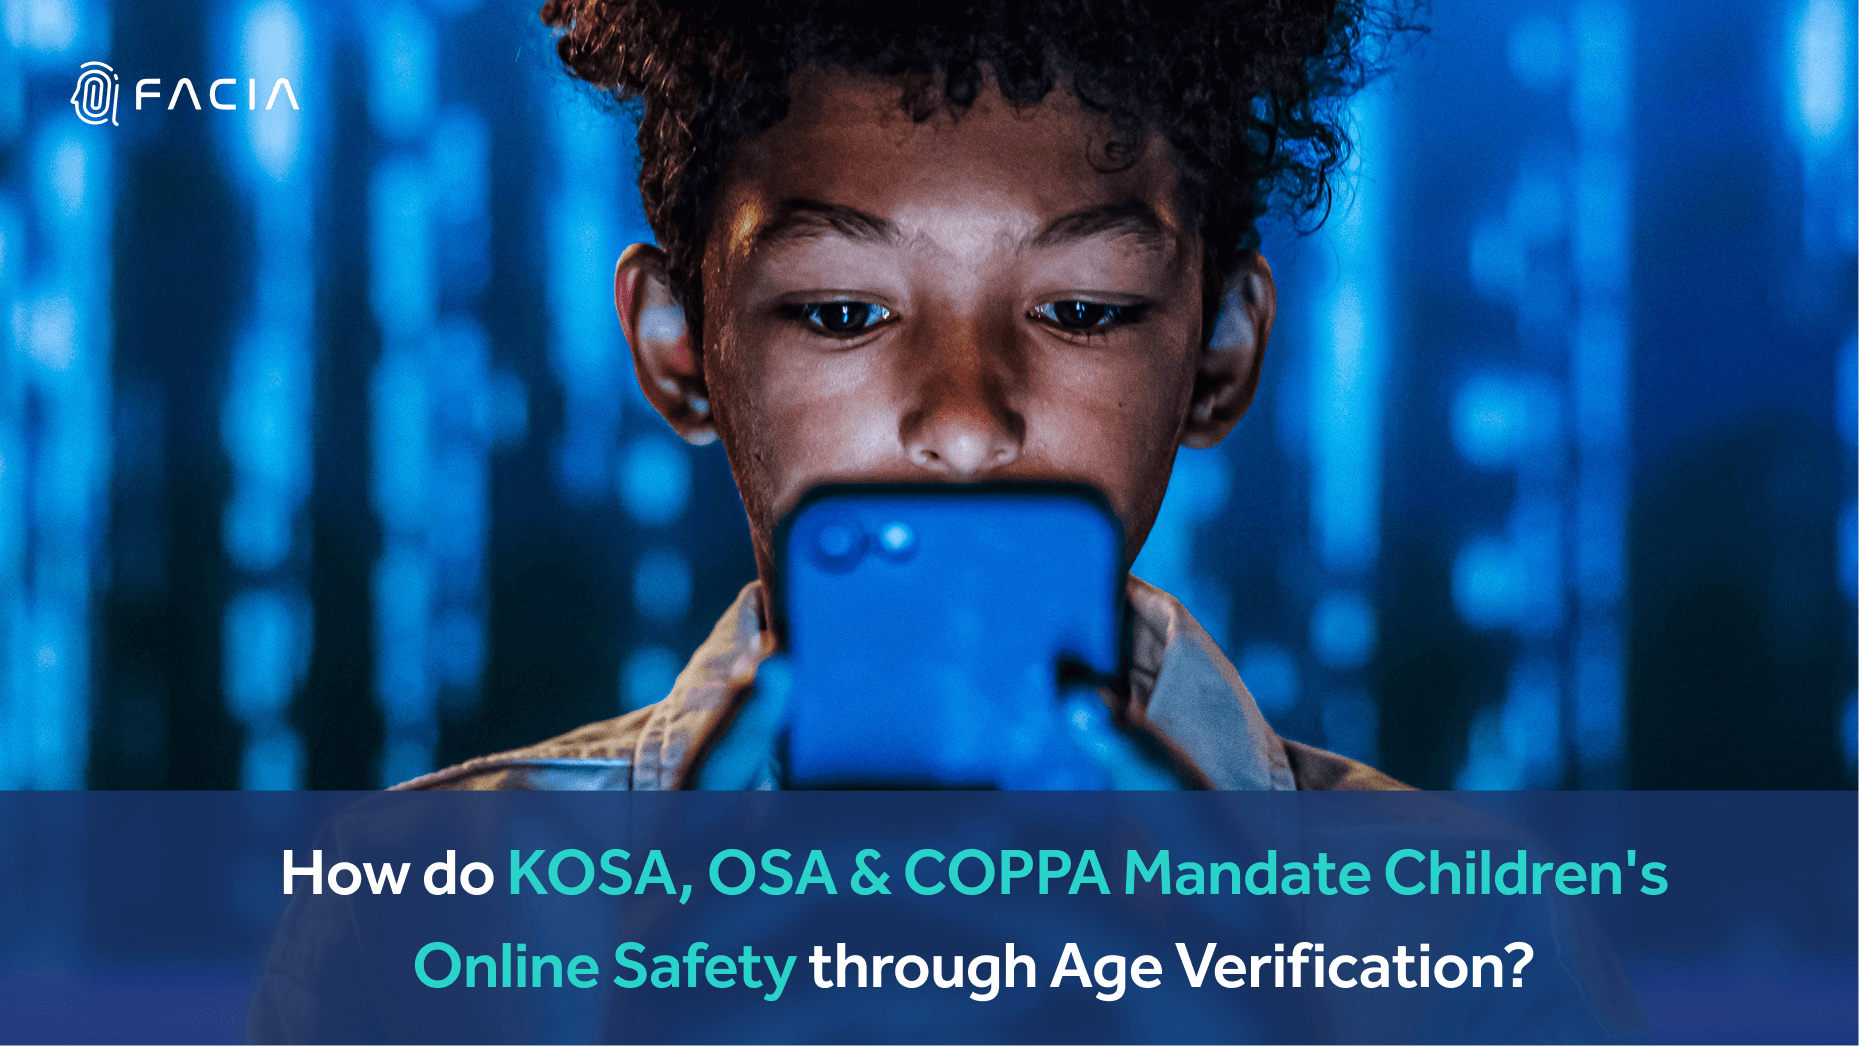 How do KOSA, OSA & COPPA Mandate Children’s Online Safety through Age Verification?